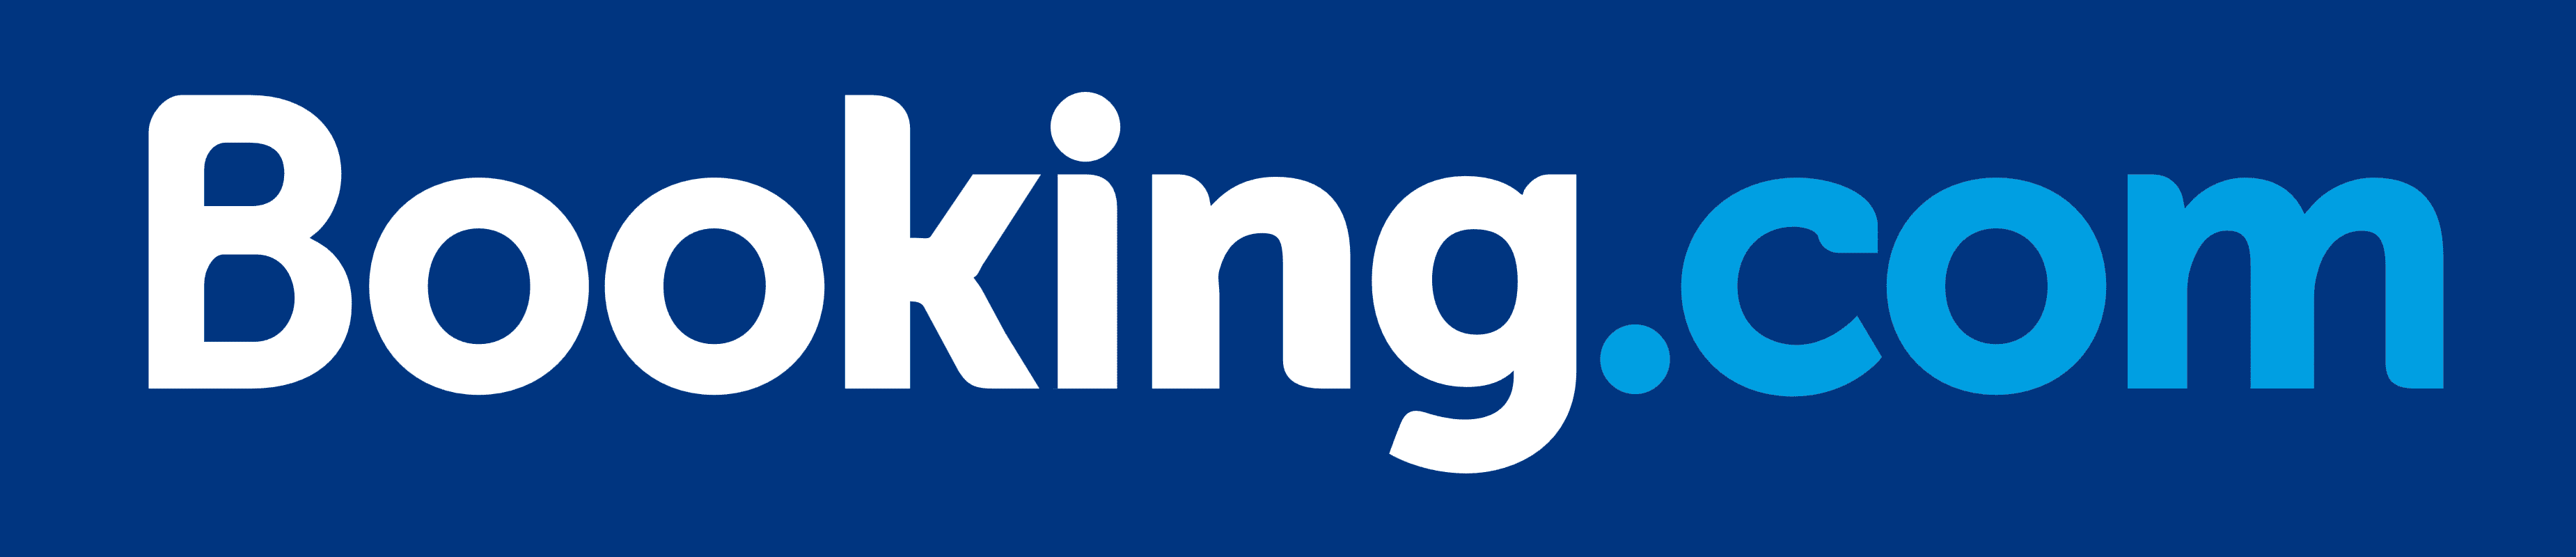 Booking_logo_blue